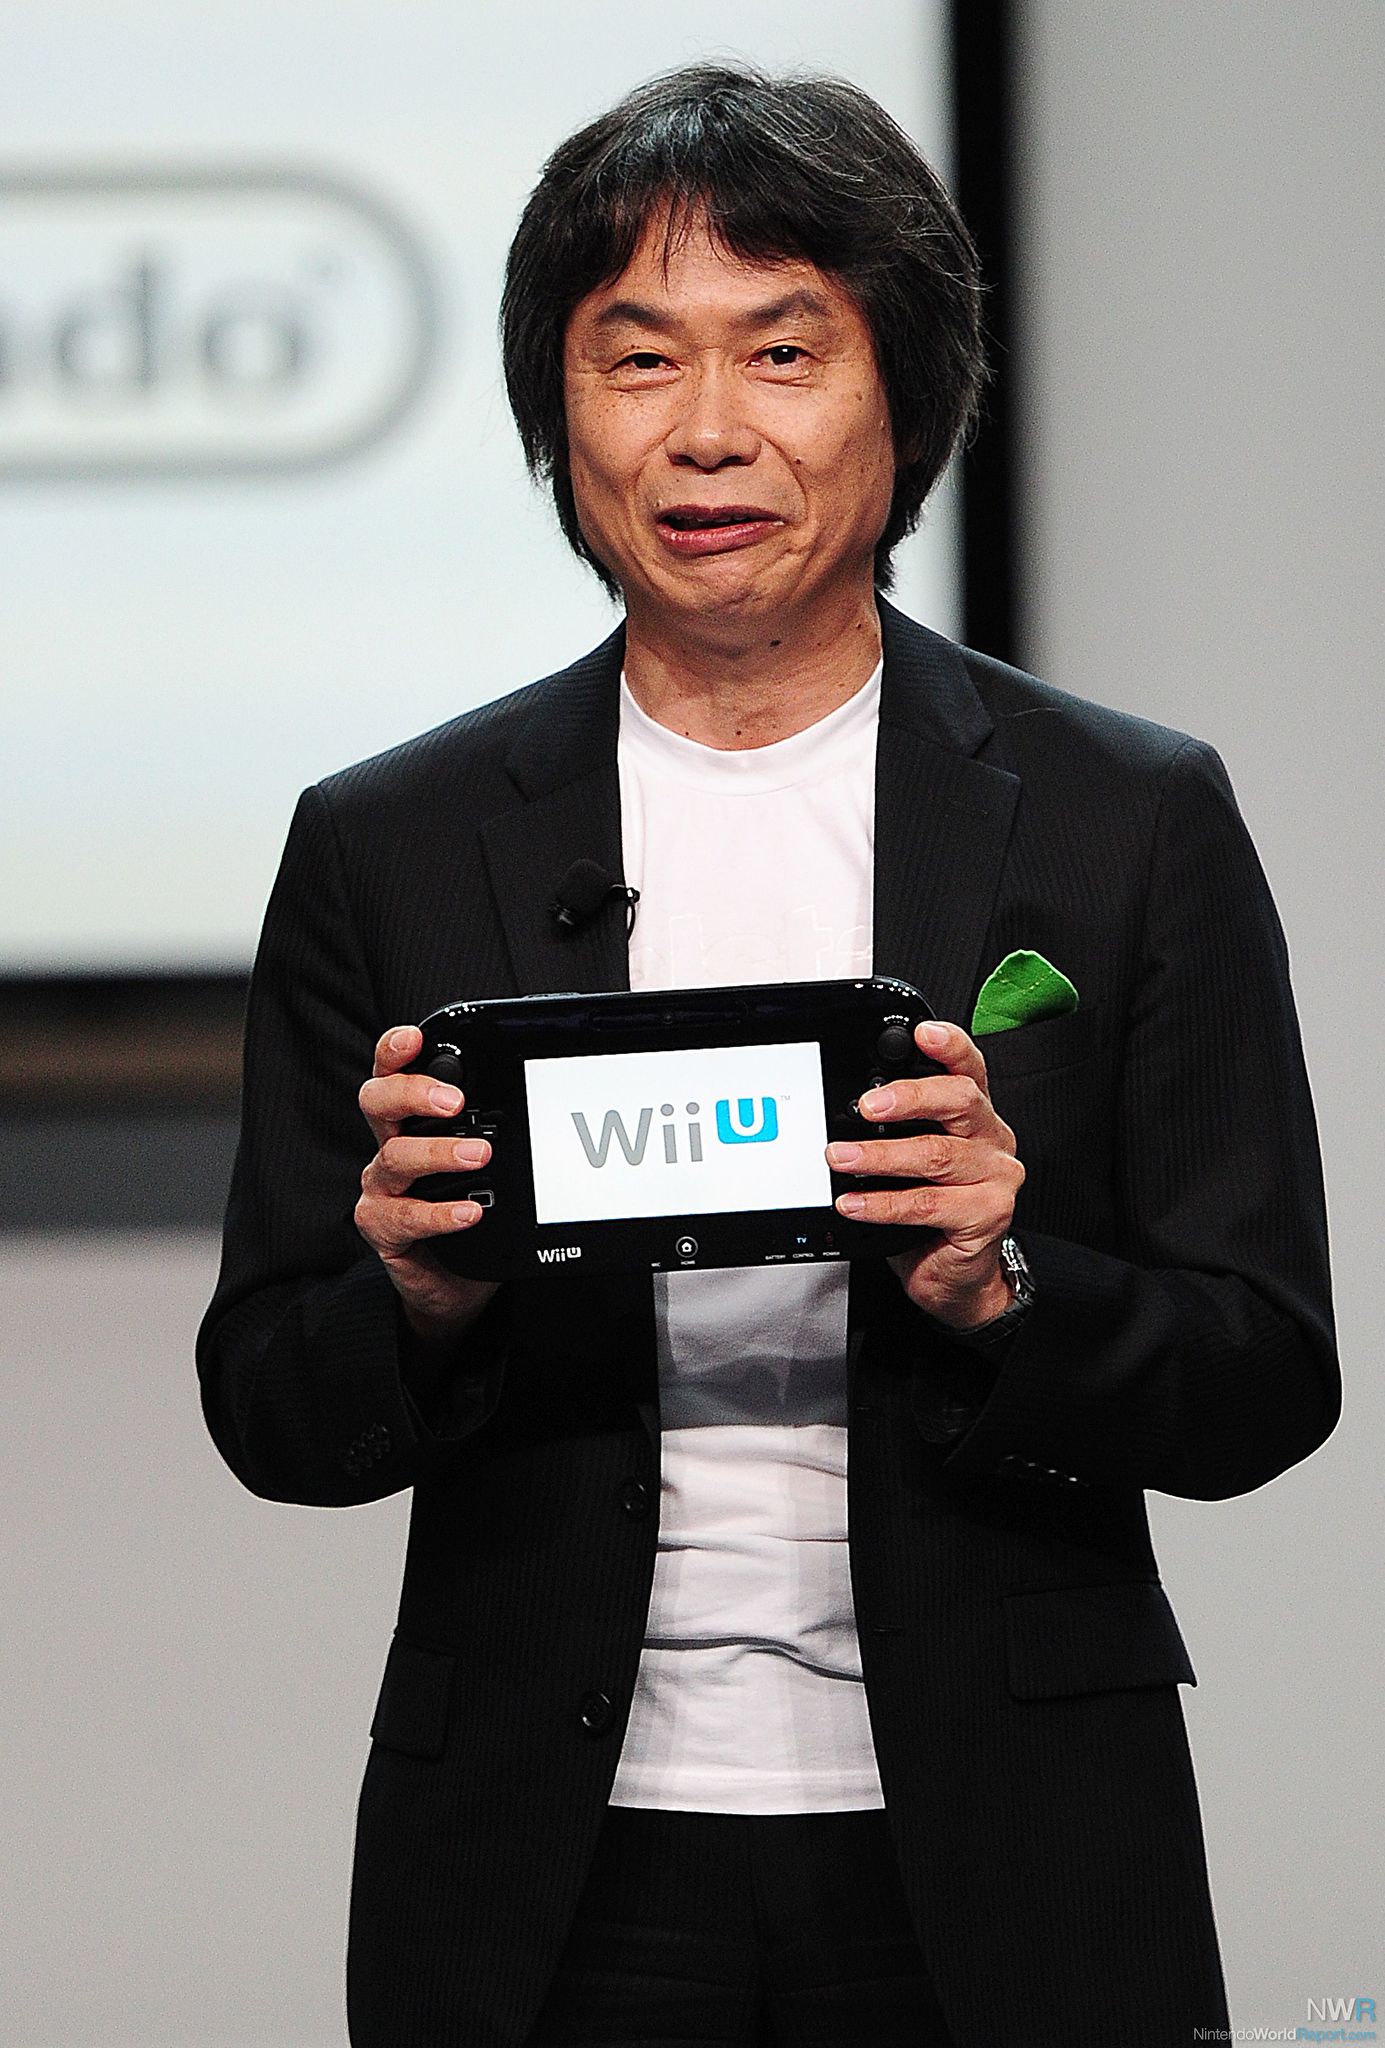 People Will Eventually Understand Wii U According To Miyamoto - News -  Nintendo World Report